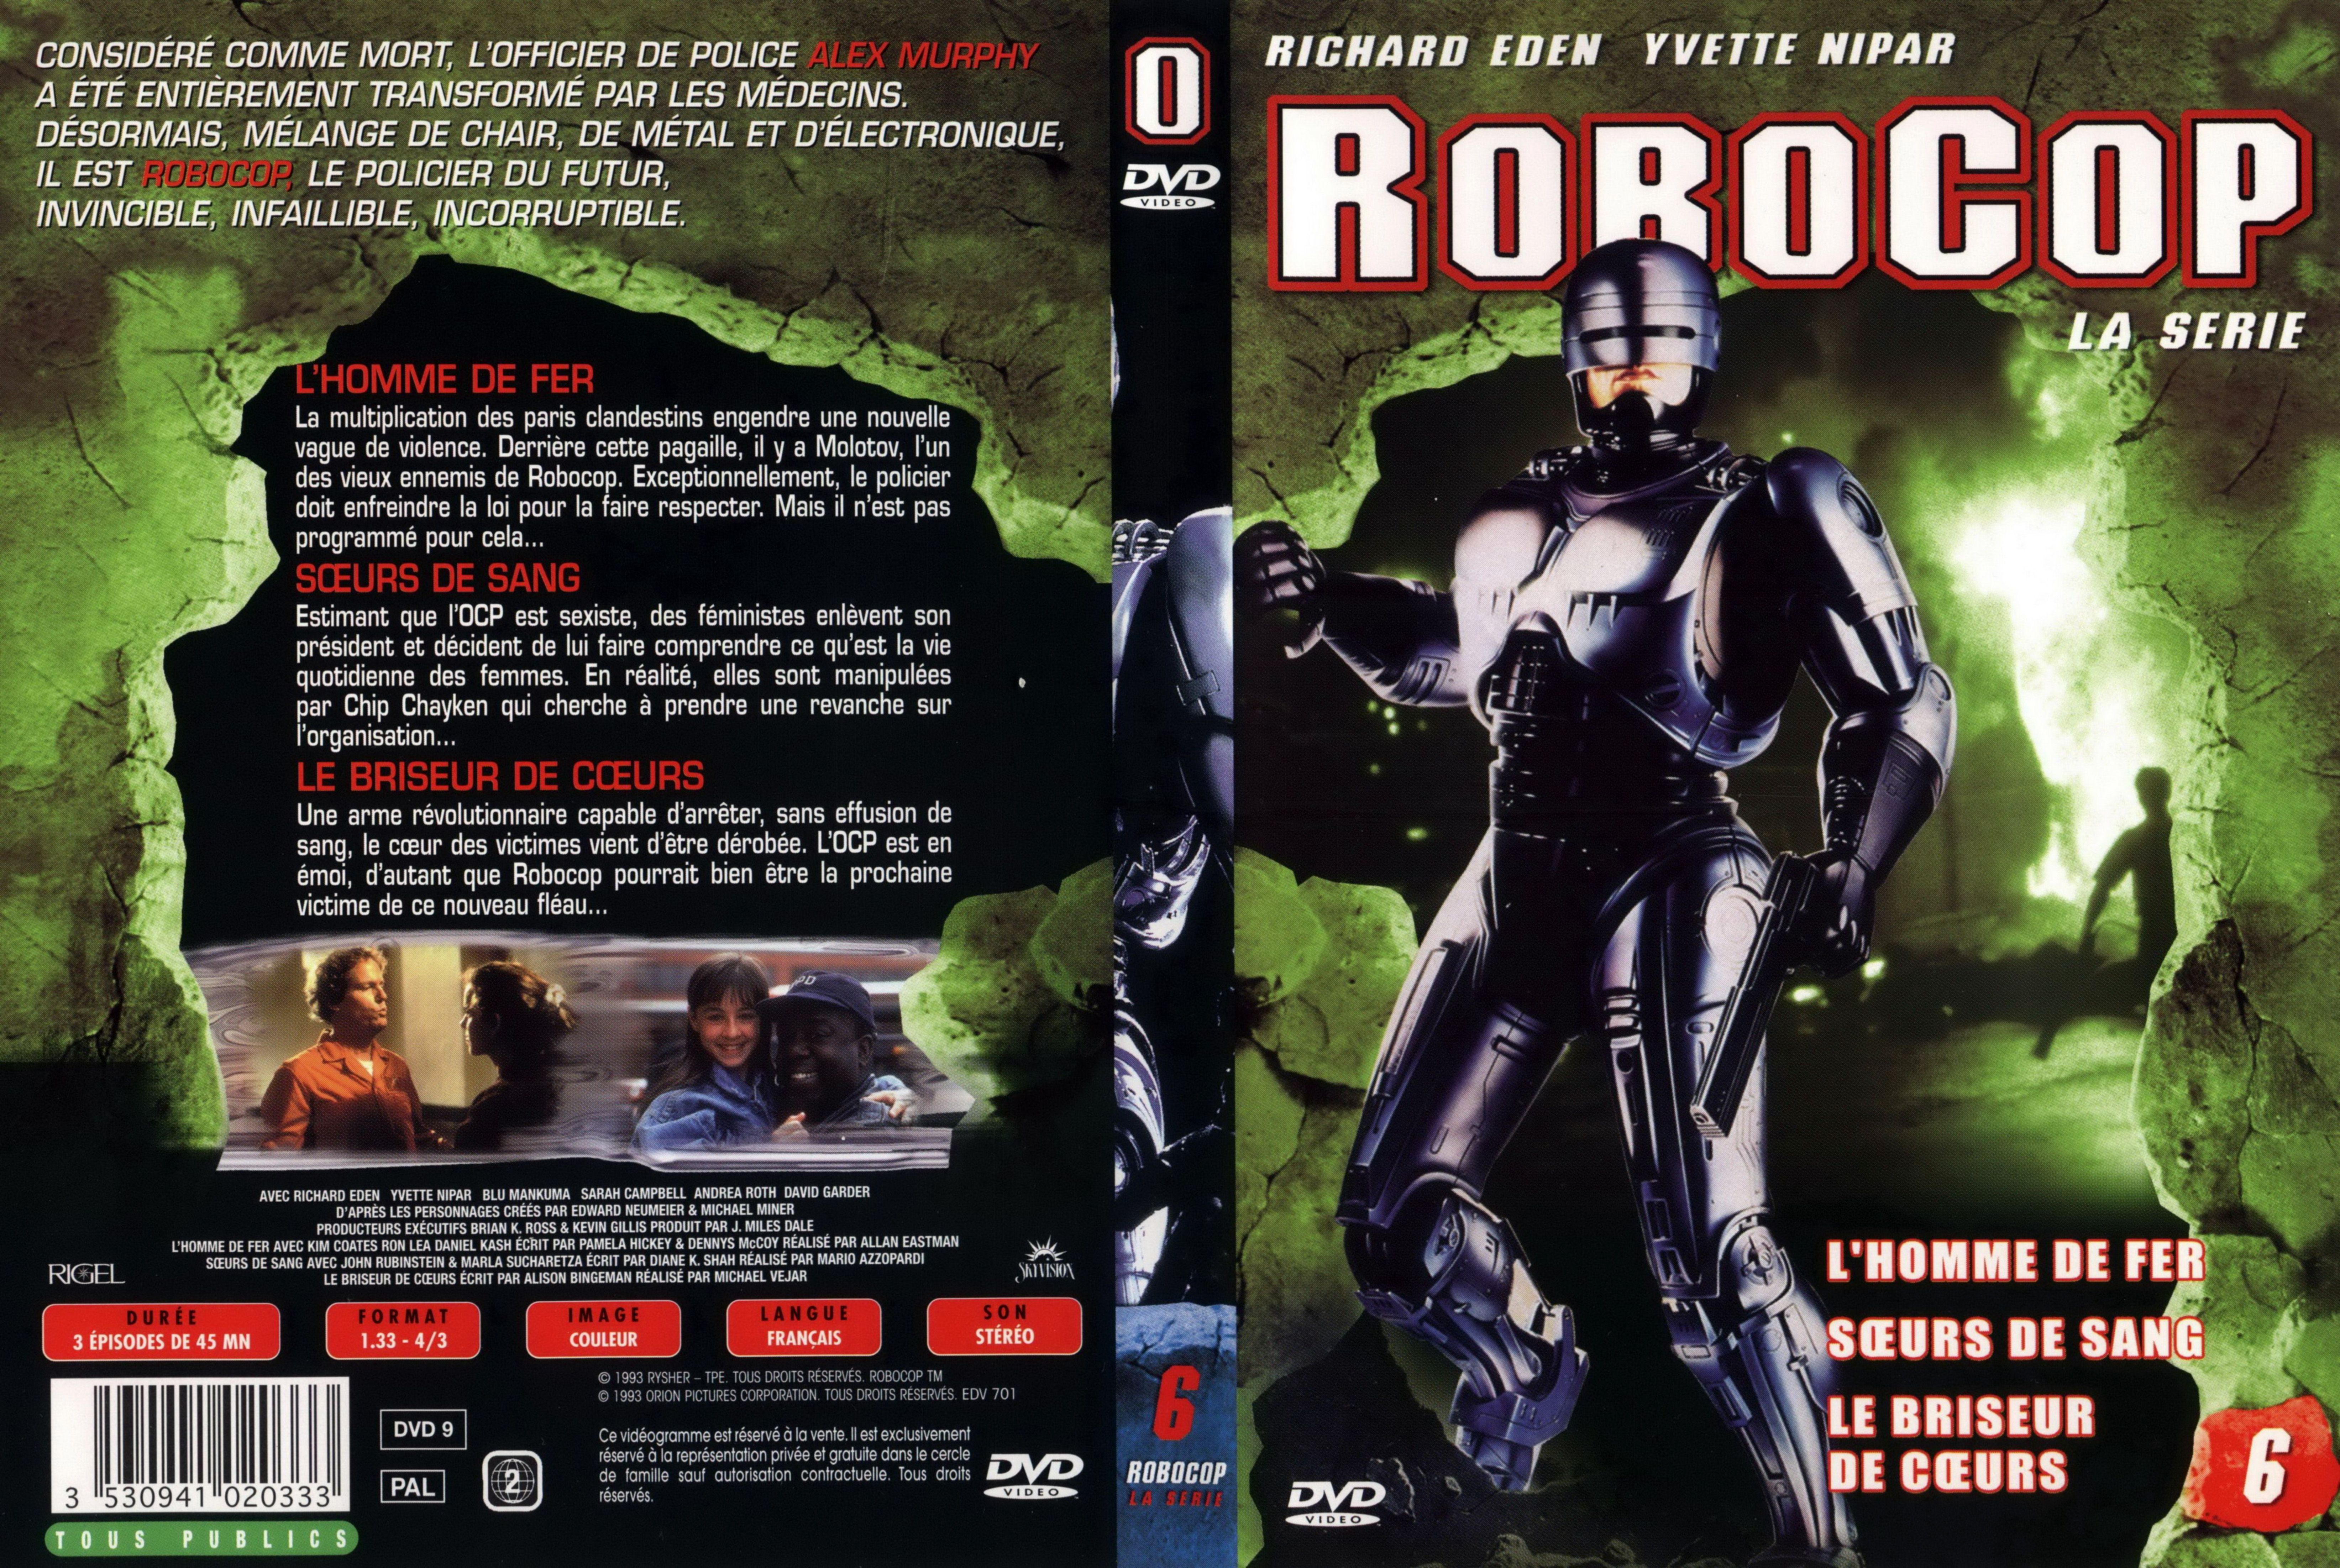 Jaquette DVD Robocop la srie vol 6